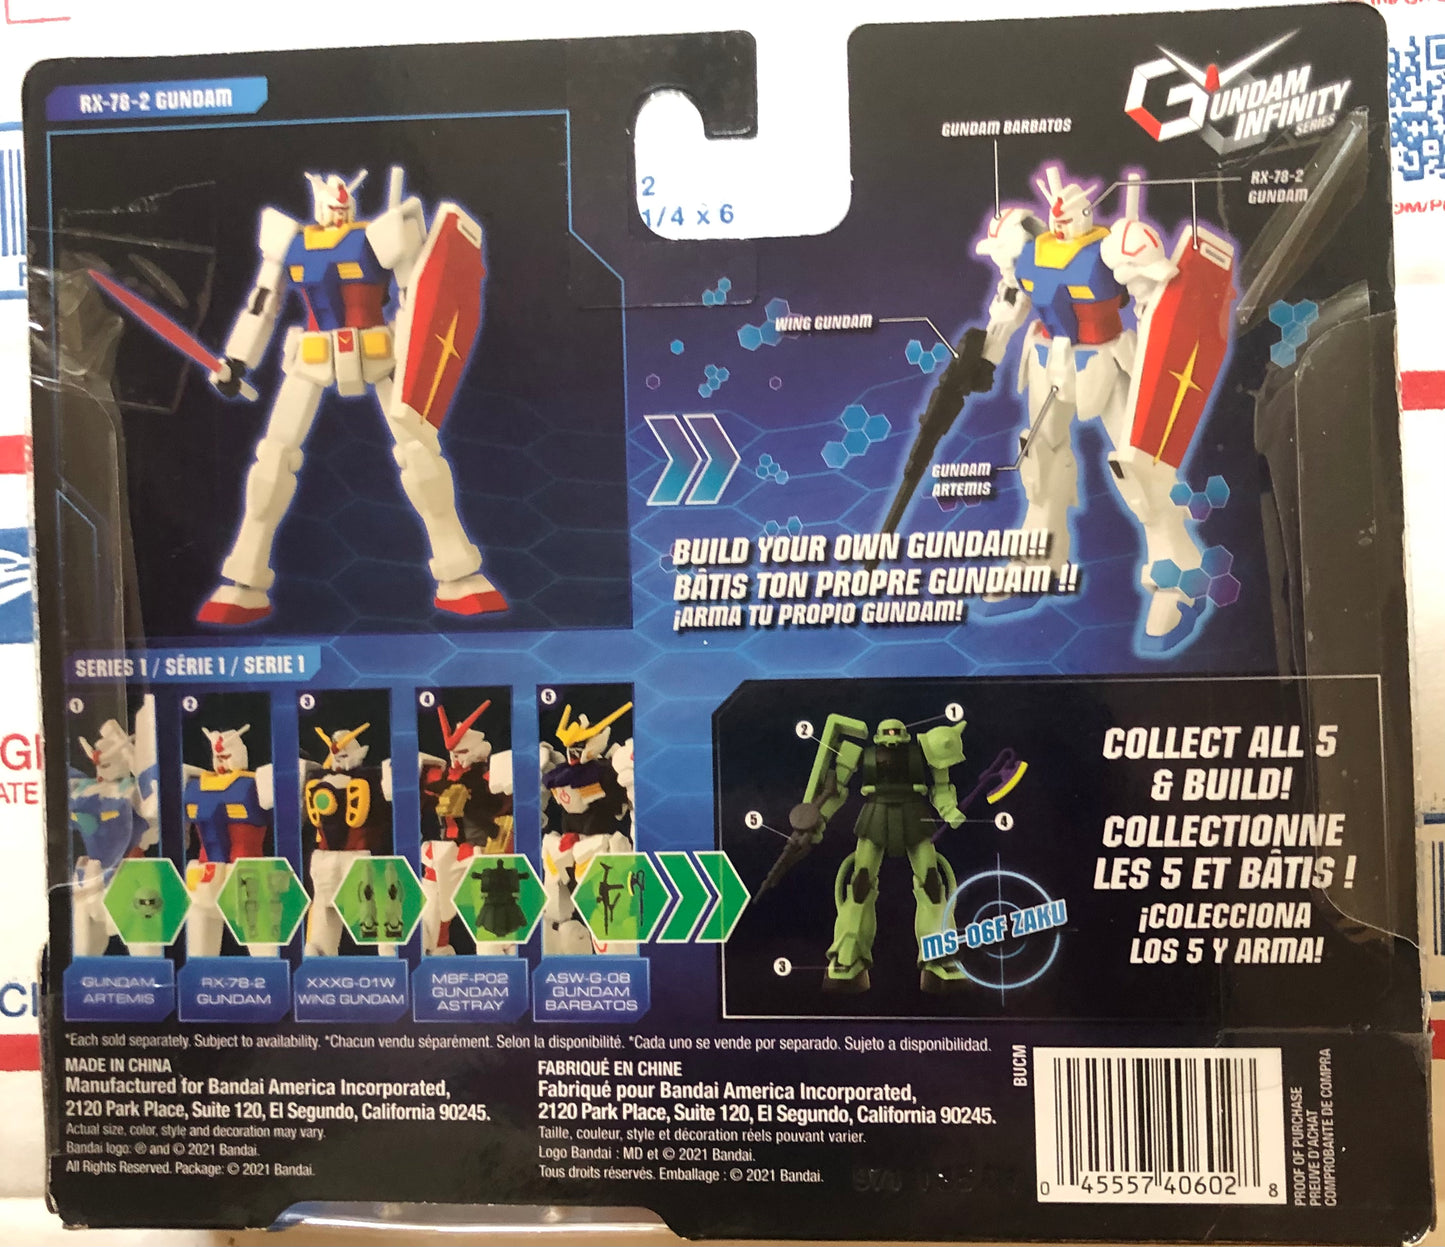 Gundam Infinity Series RX-78-2 + Zaku 4.5 Inch Action Figure